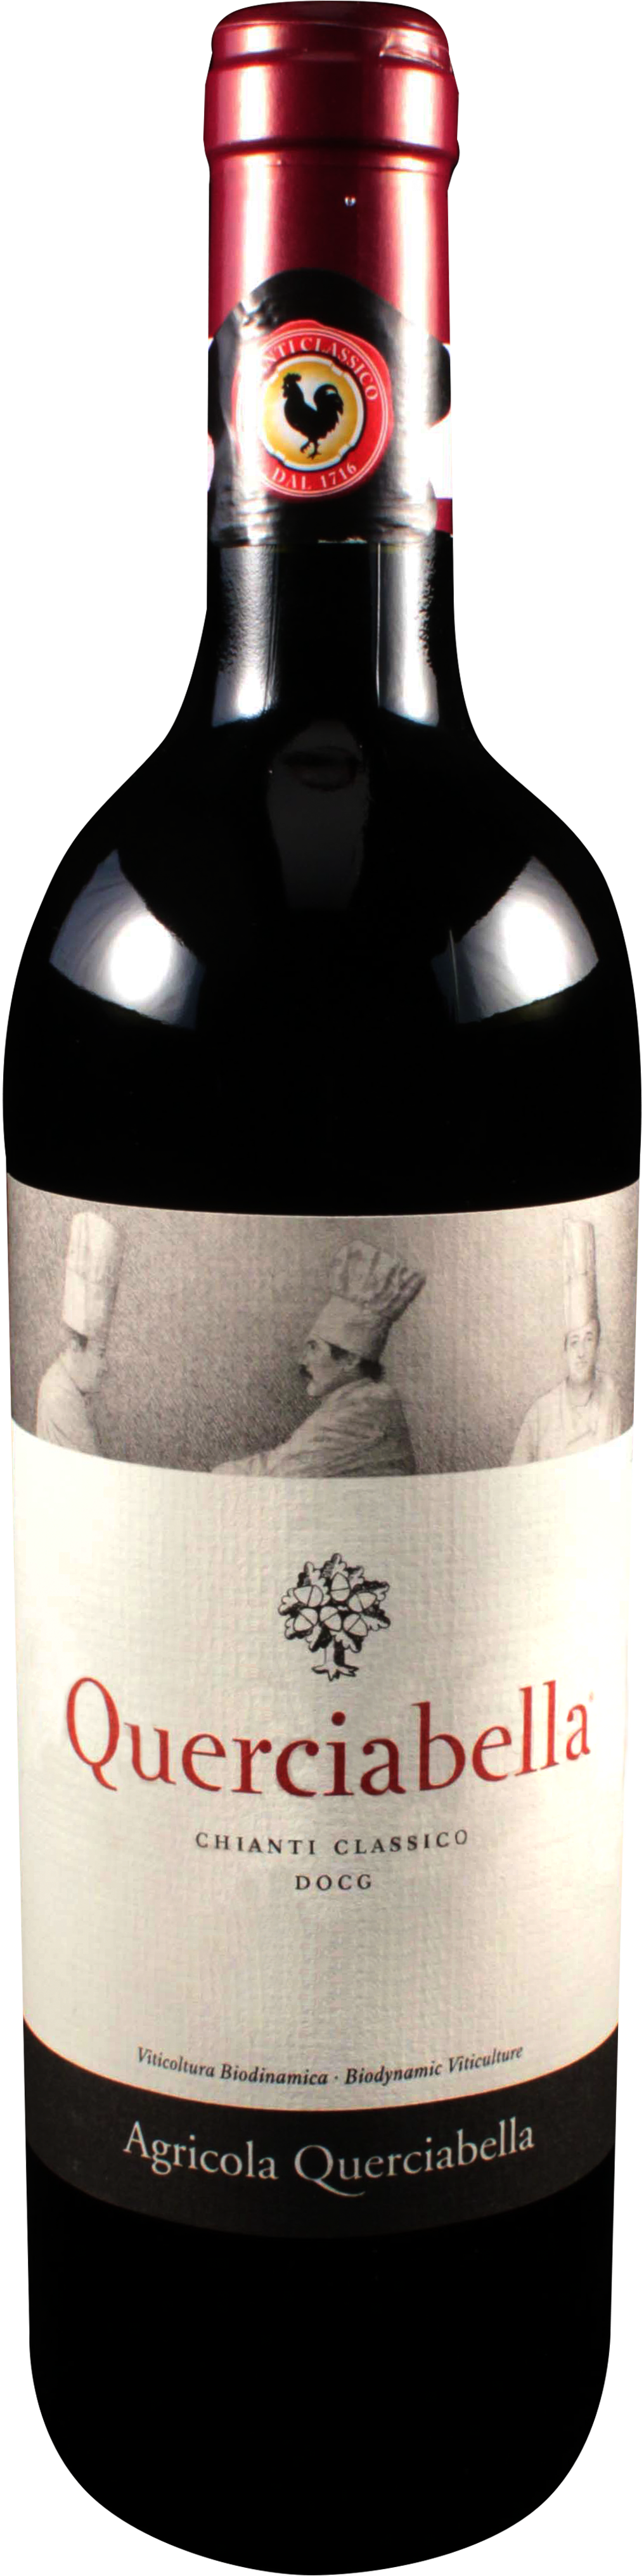 Bottle shot of 2010 Chianti Classico